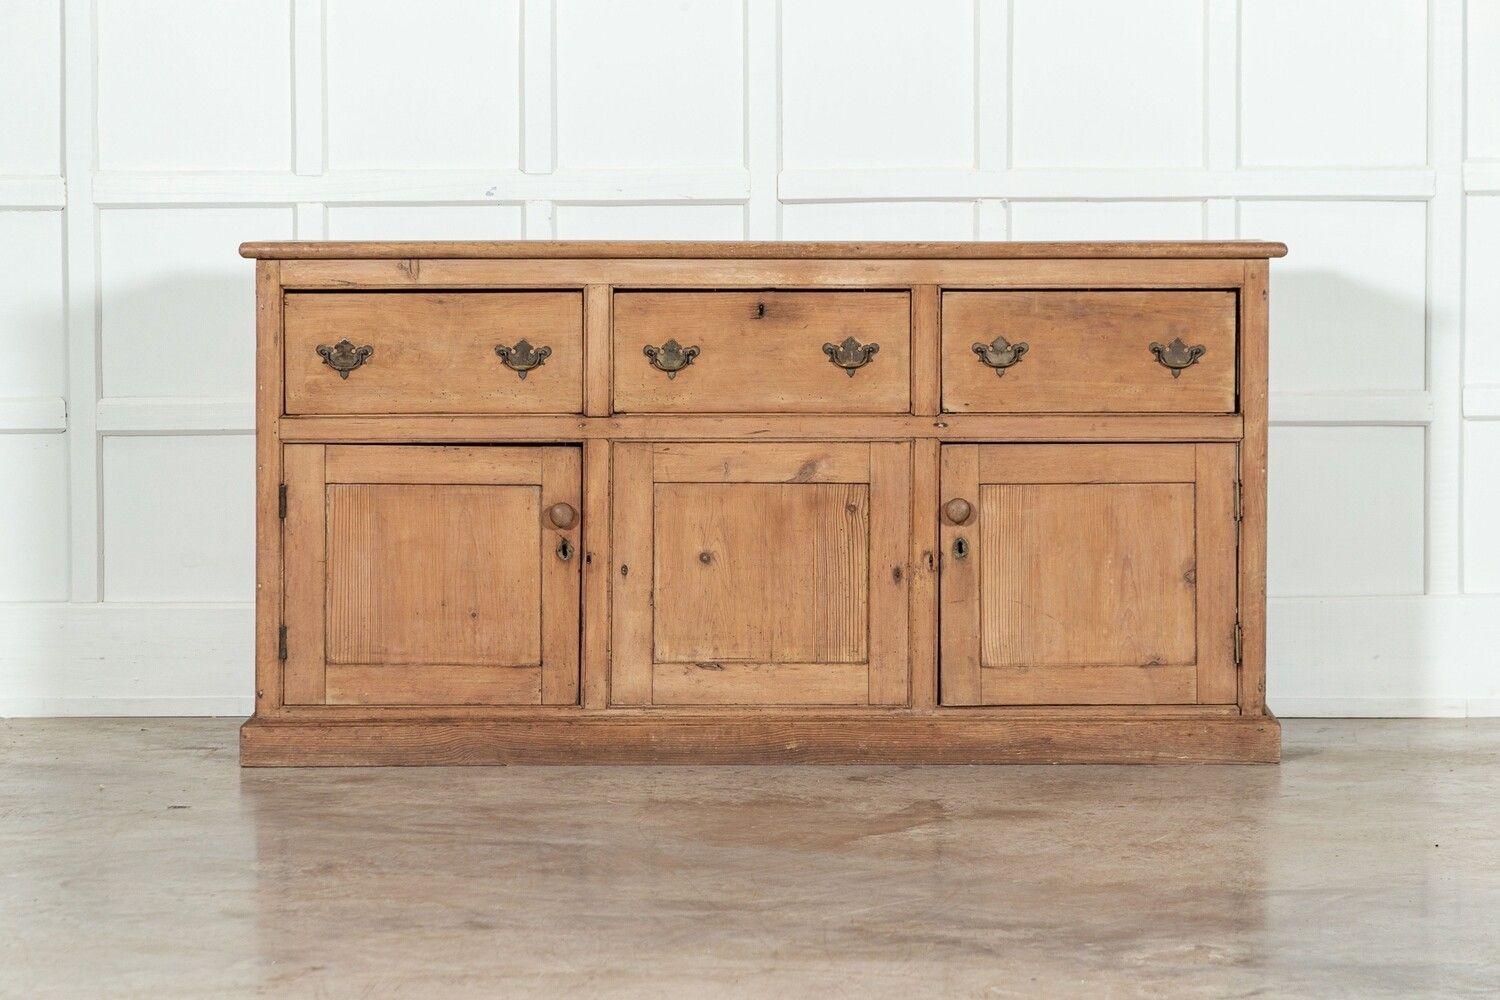 circa 1880
19thC English Pine Dresser Base
sku 1647
W173 x D42 x H87 cm